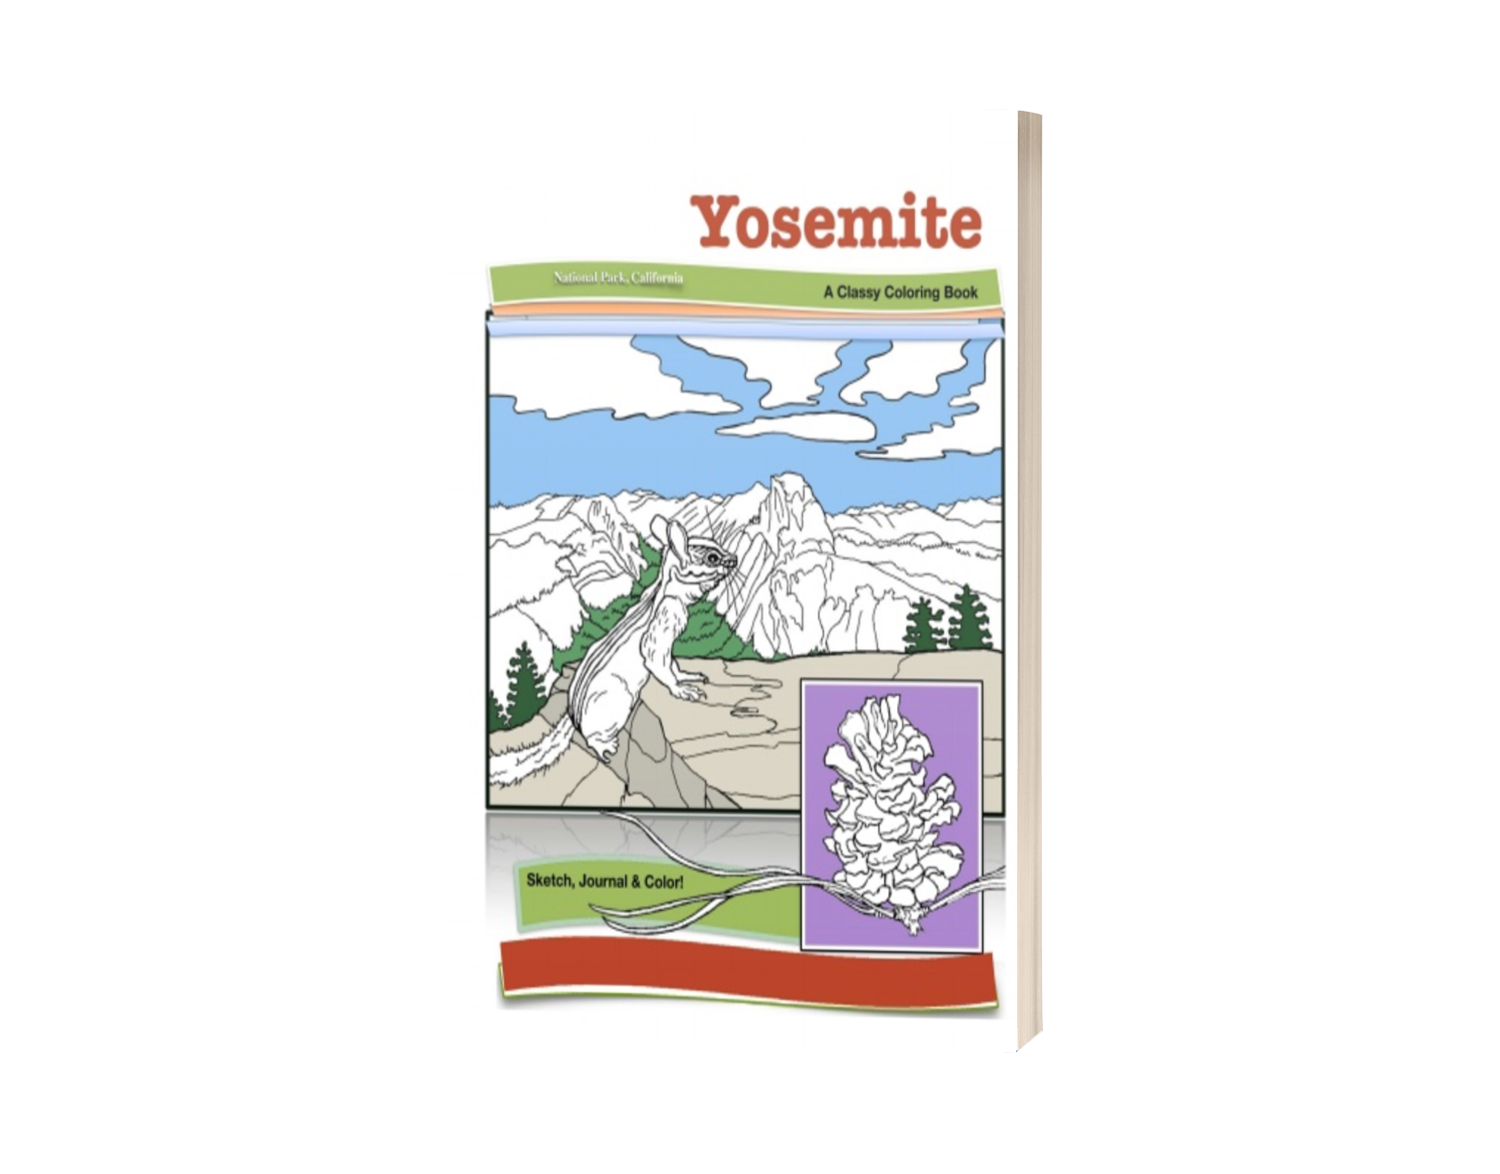 Yosemite National Park - A Classy Coloring Book